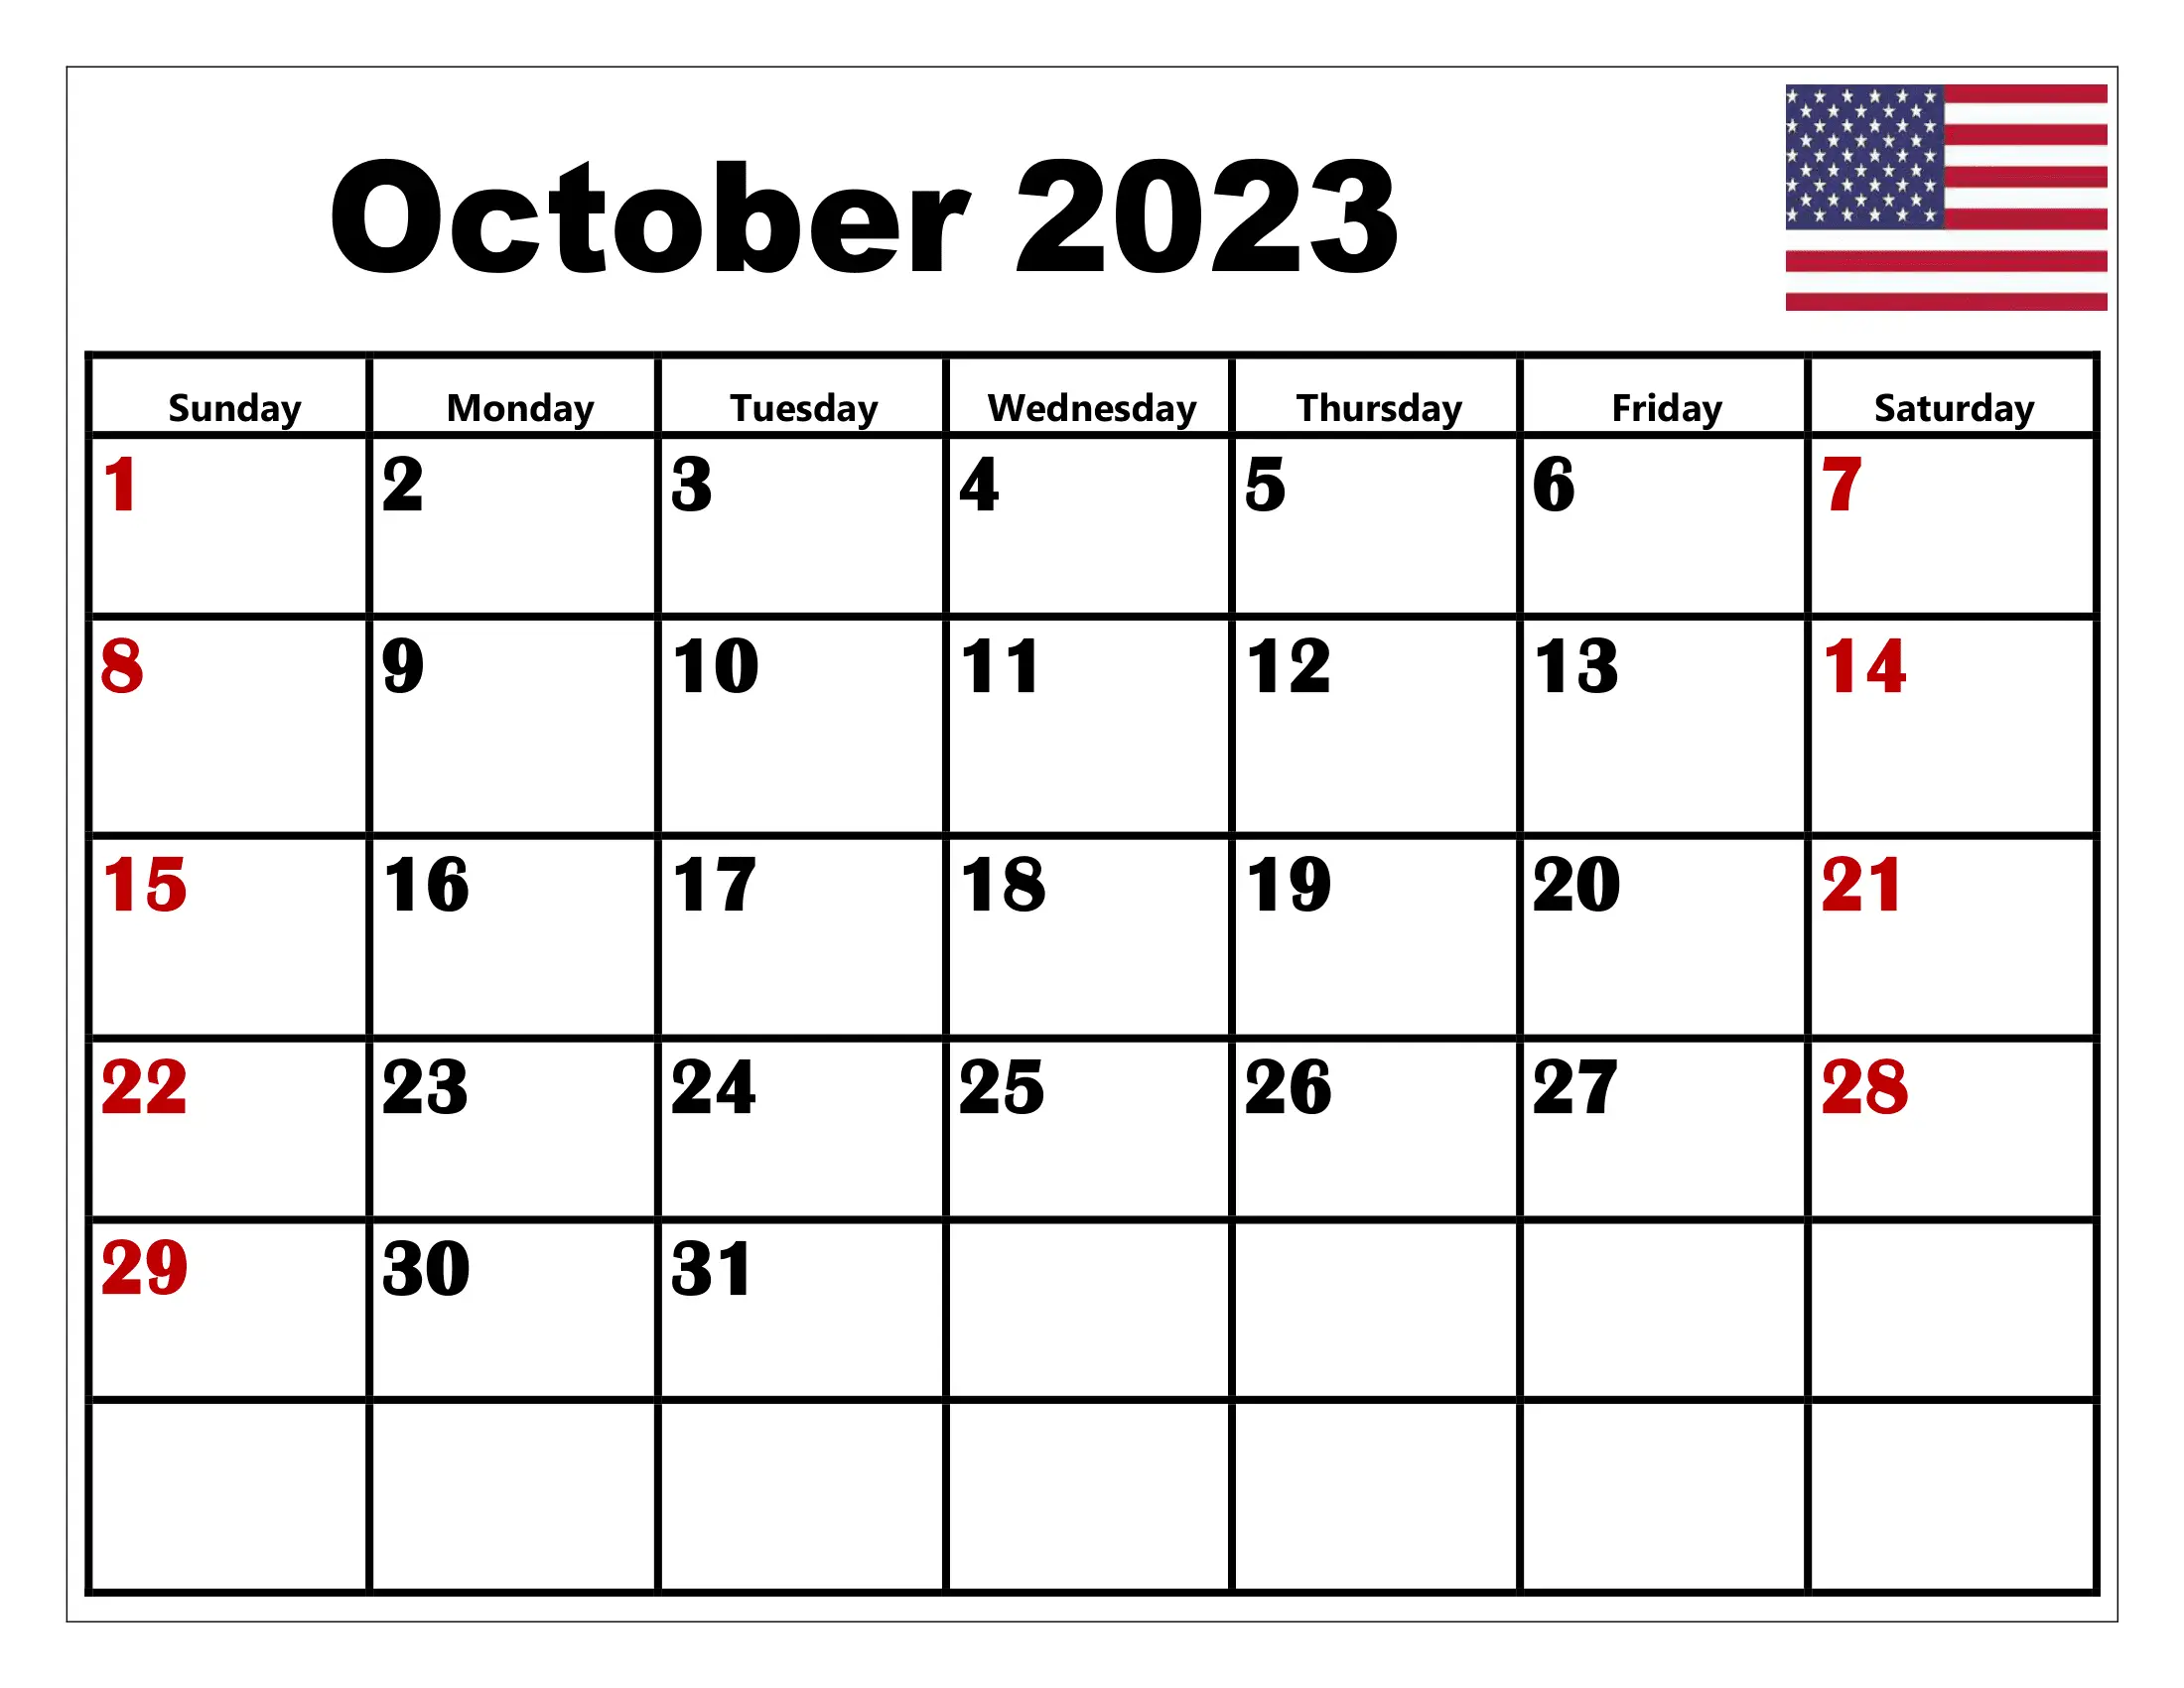 October 2023 Calendar With US Holidays